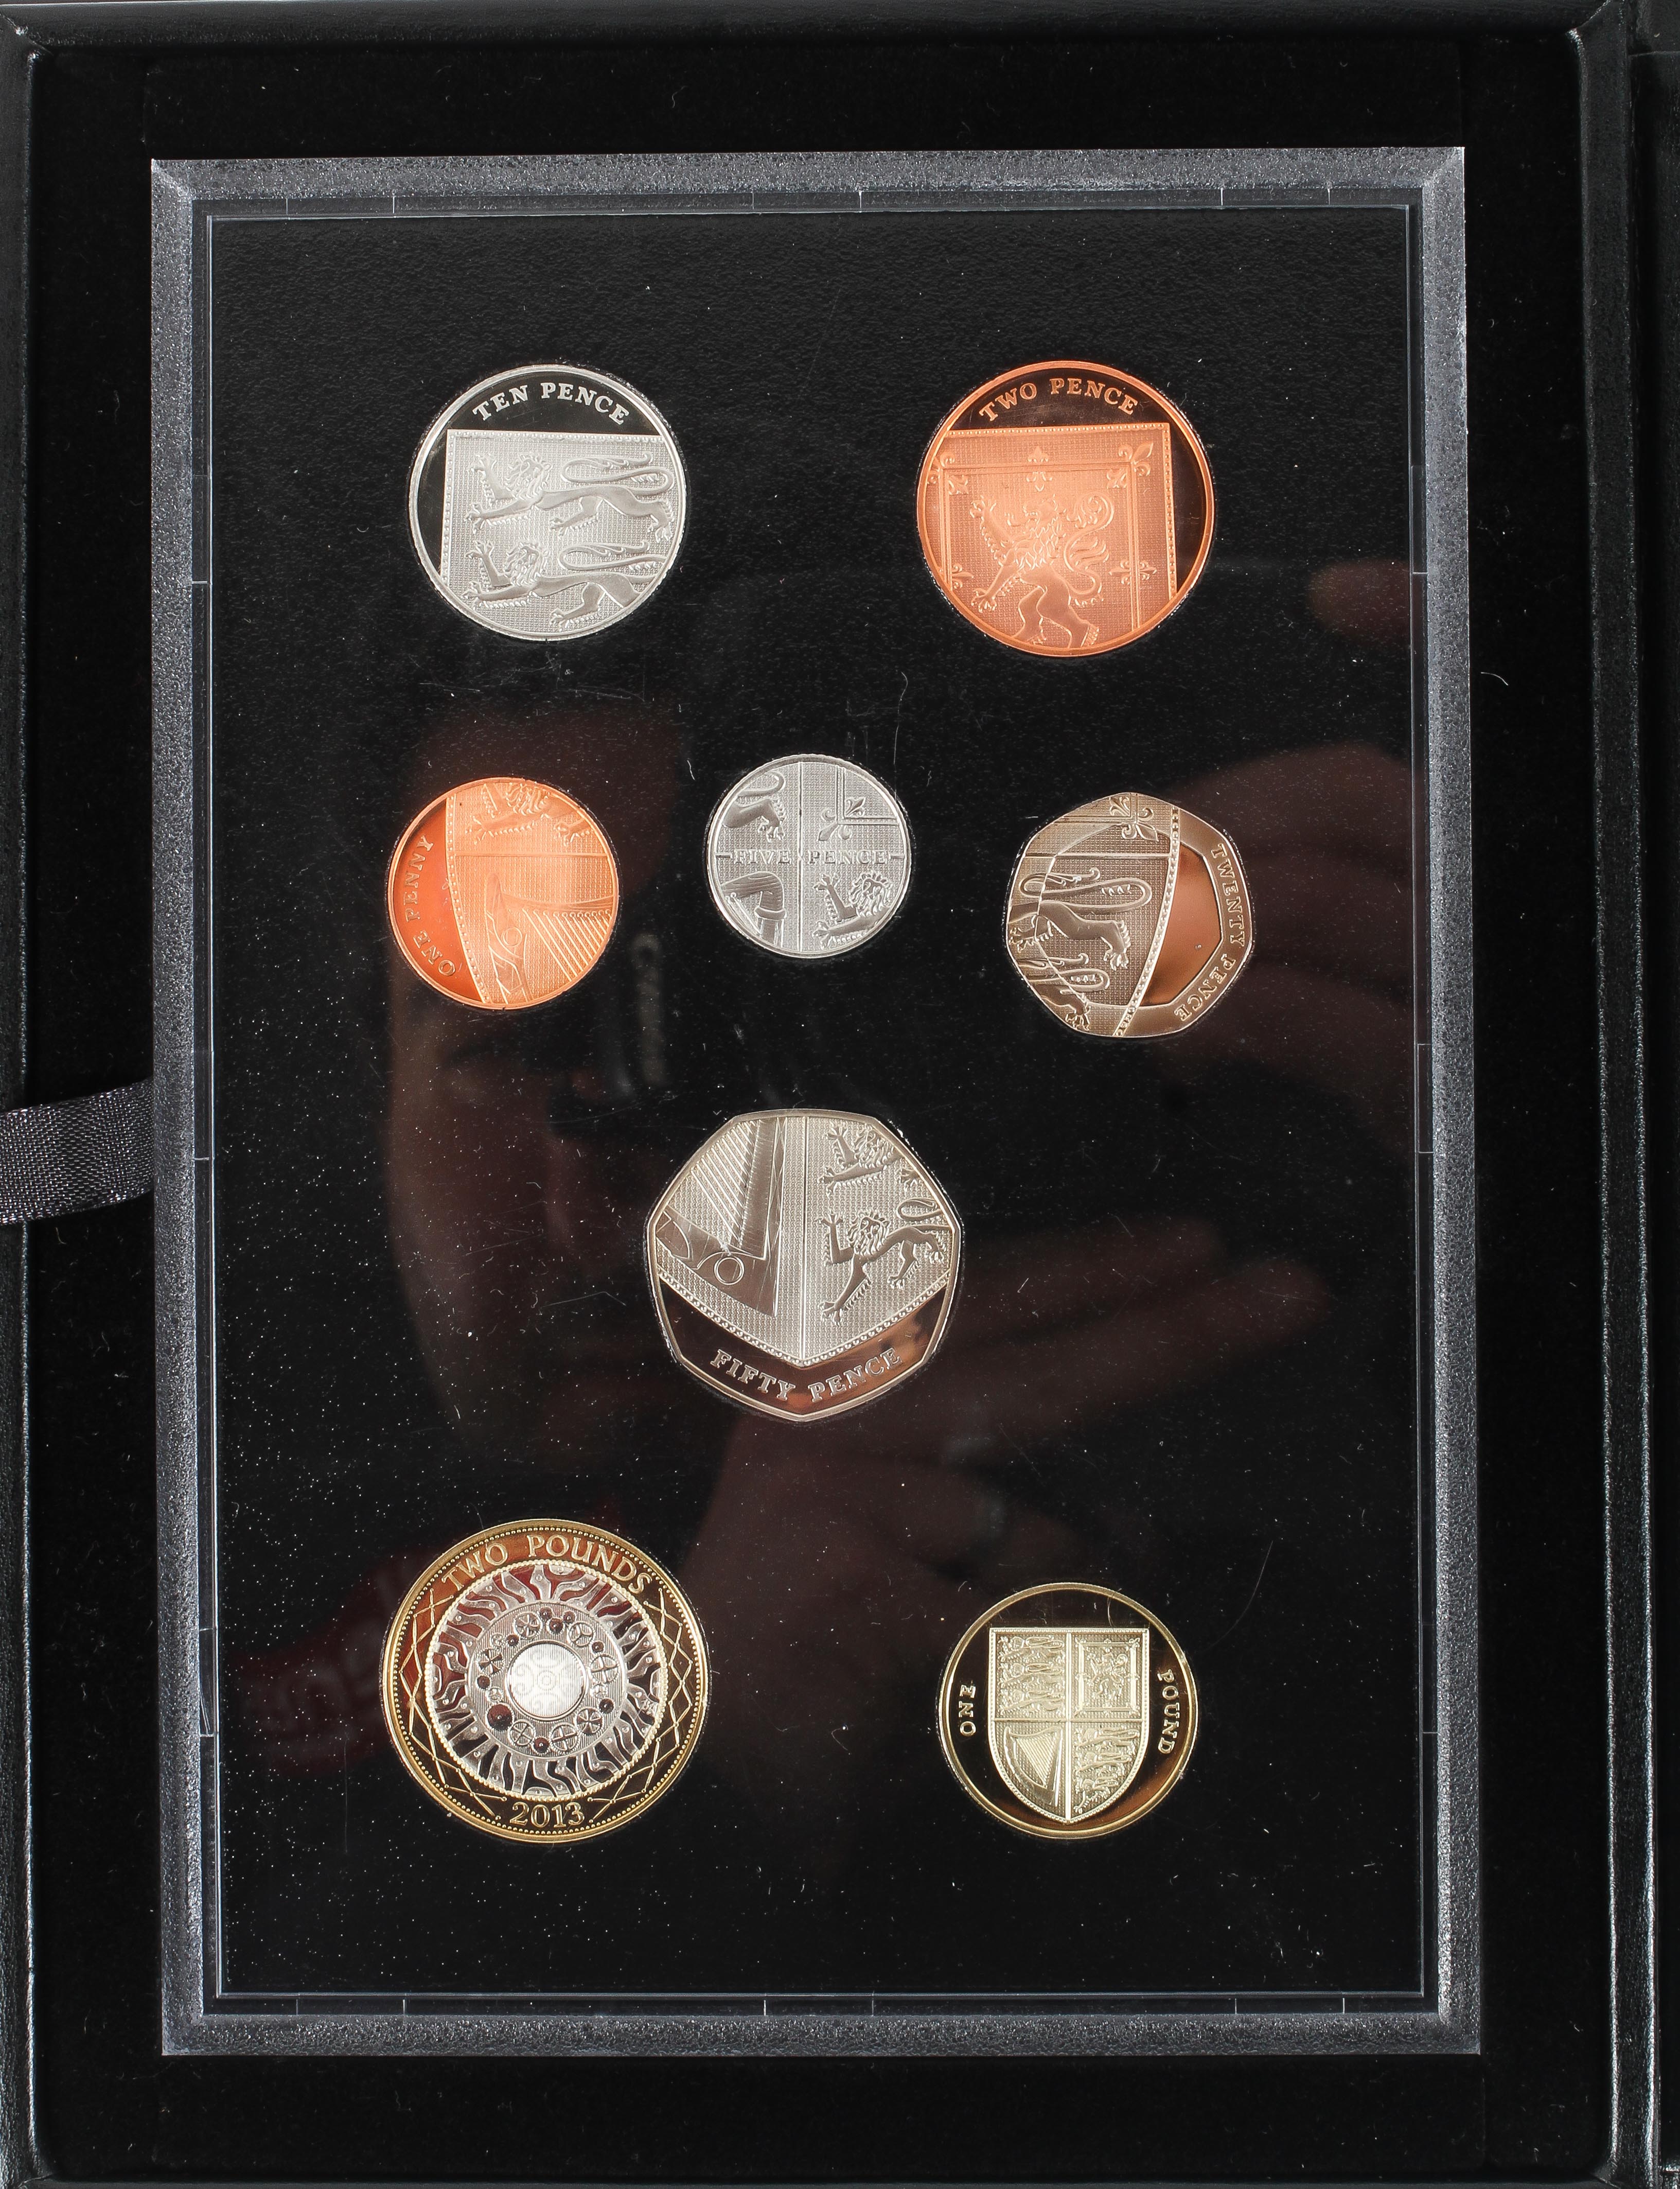 A Royal Mint 2013 UK collector coin set.